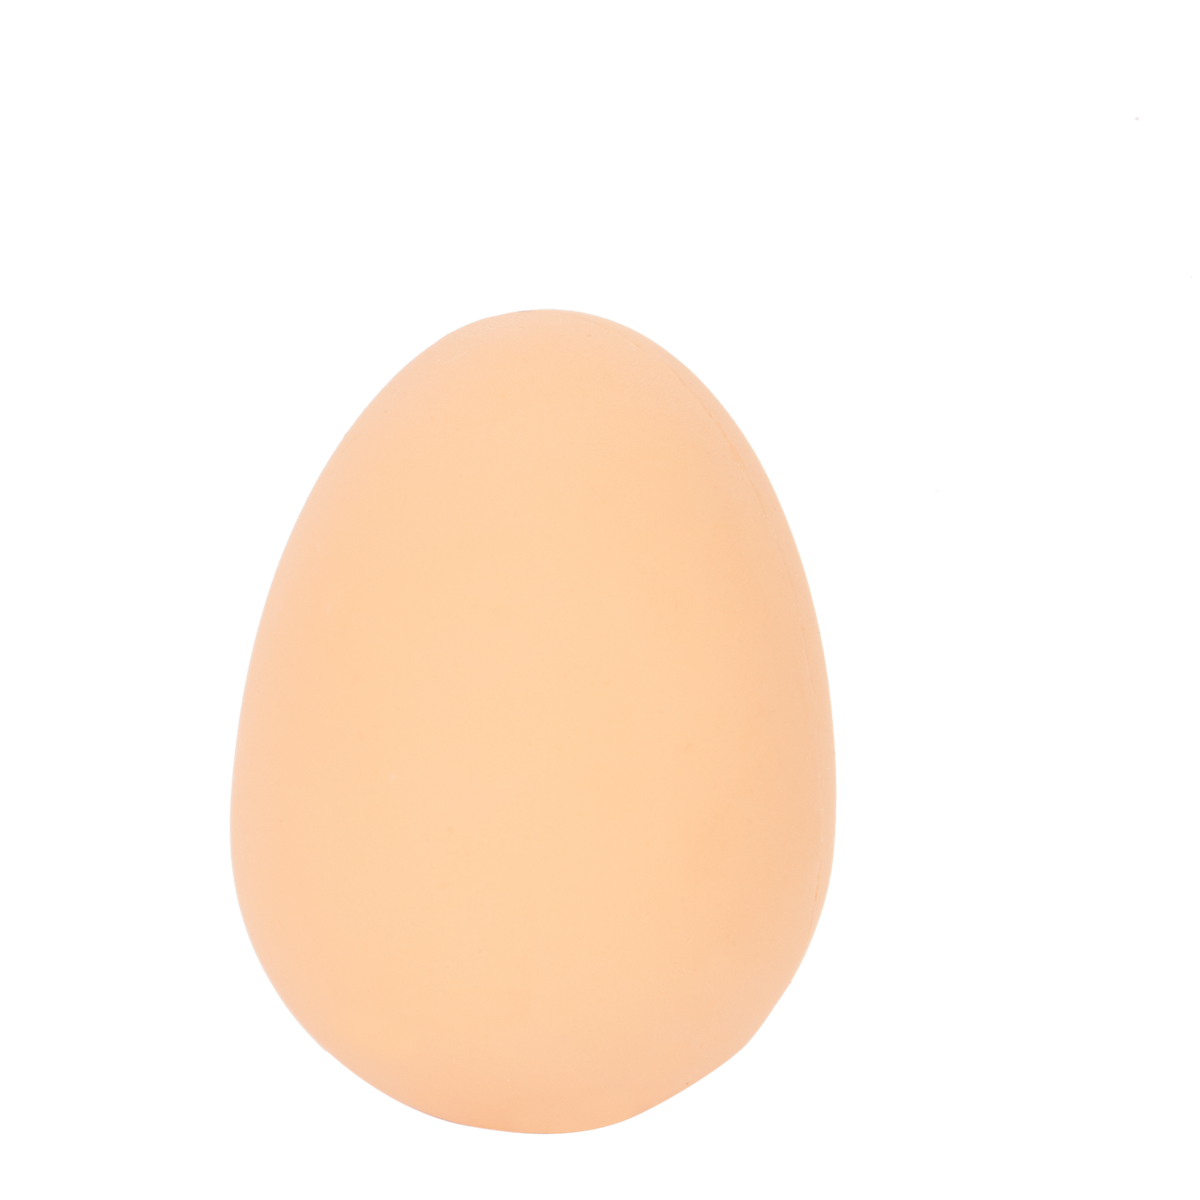 Uovo che rimbalza